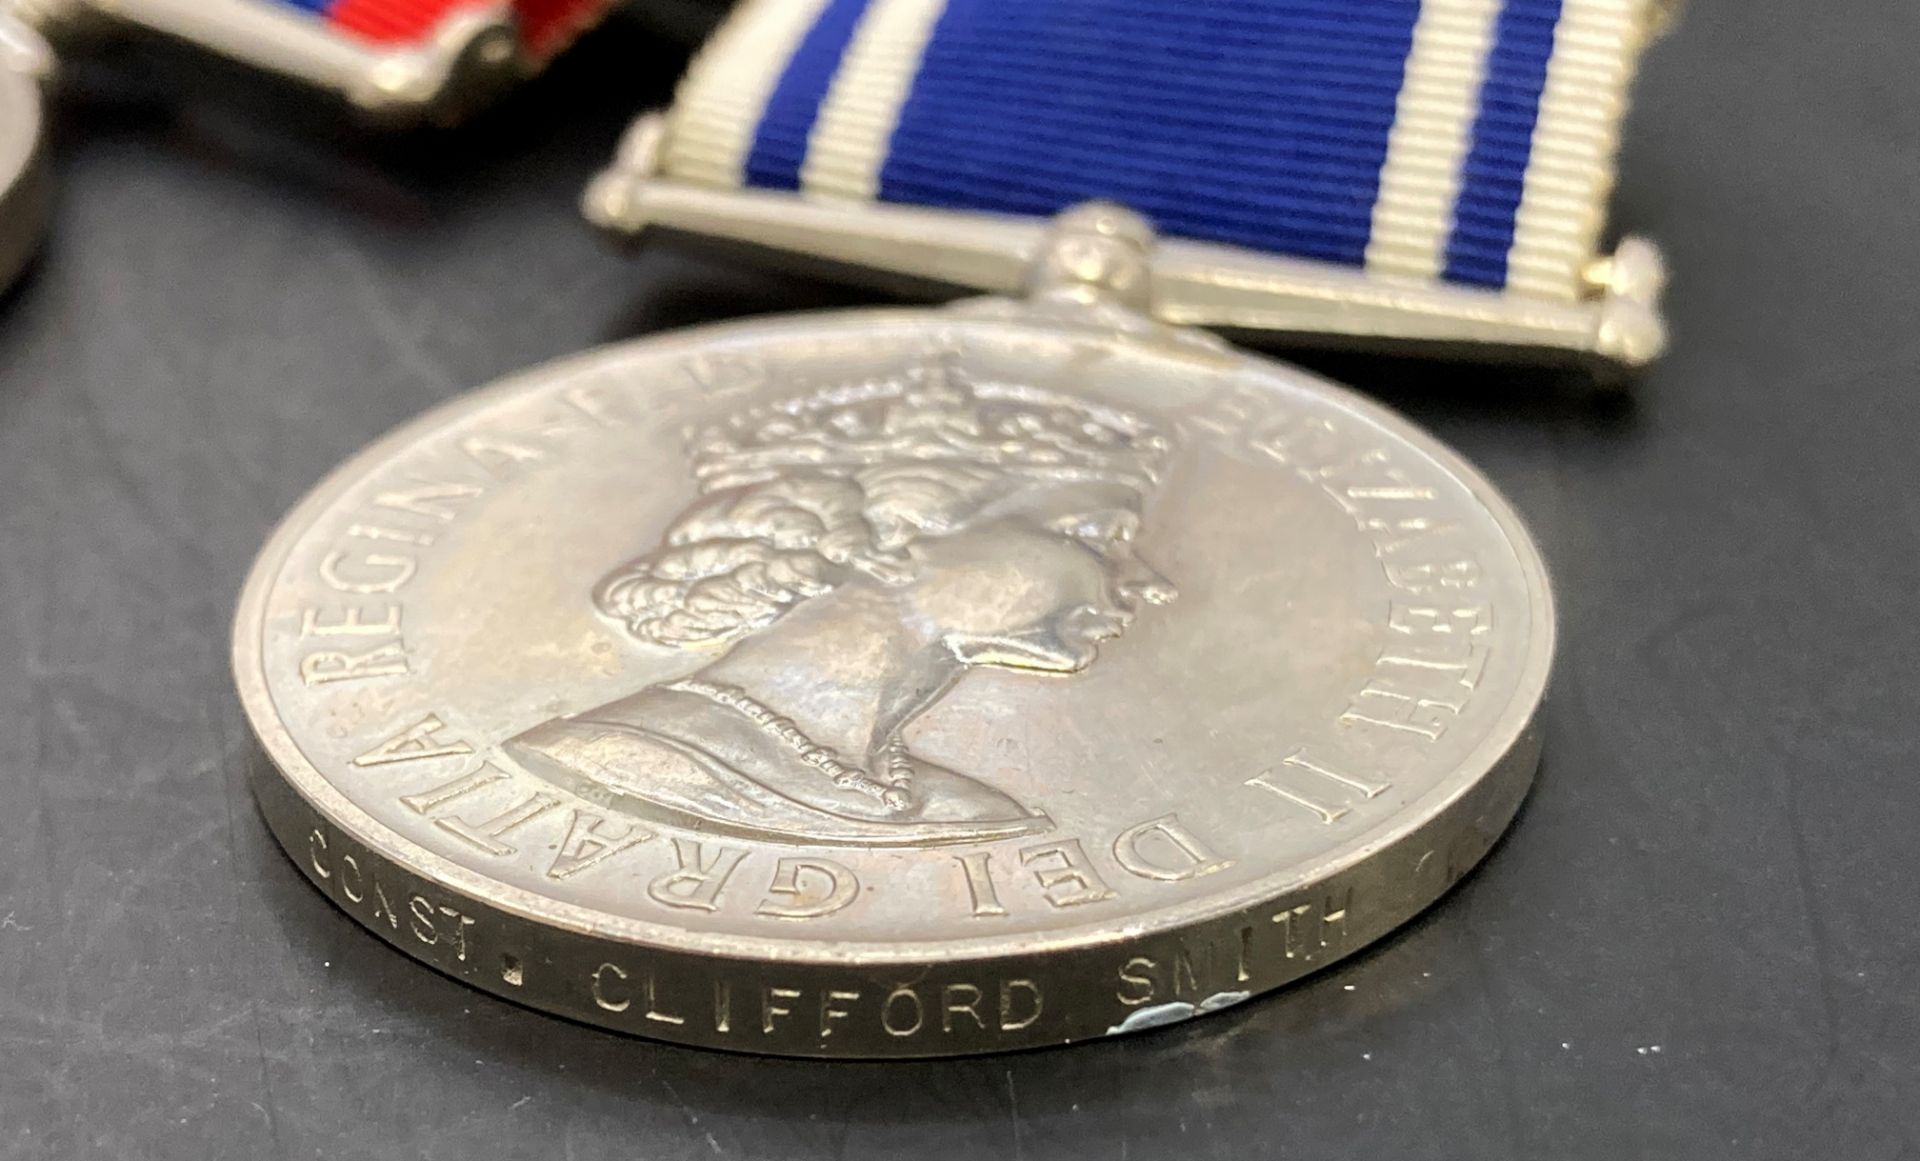 Four World War II Medals - 1939-1945 Star, Atlantic Star, - Image 2 of 2